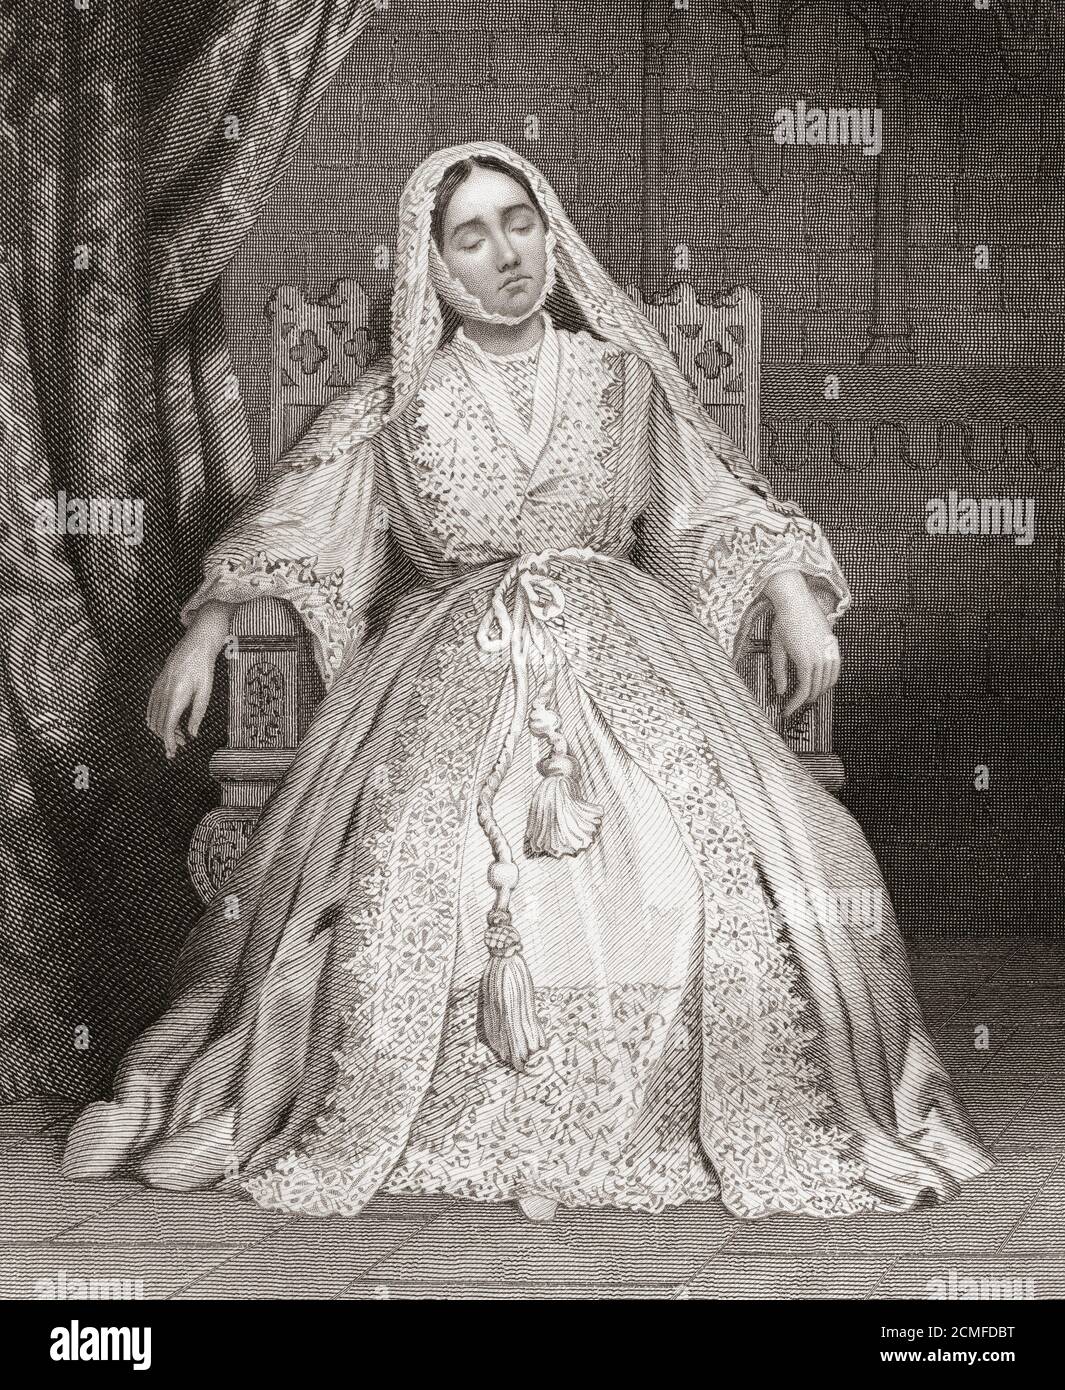 La Srta. Glynn en el papel de la Reina Katherine de la obra de Shakespeare Henry VIII Isabella Glyn, 1823 – 1889. Actriz de Shakespeare de la época victoriana. Foto de stock